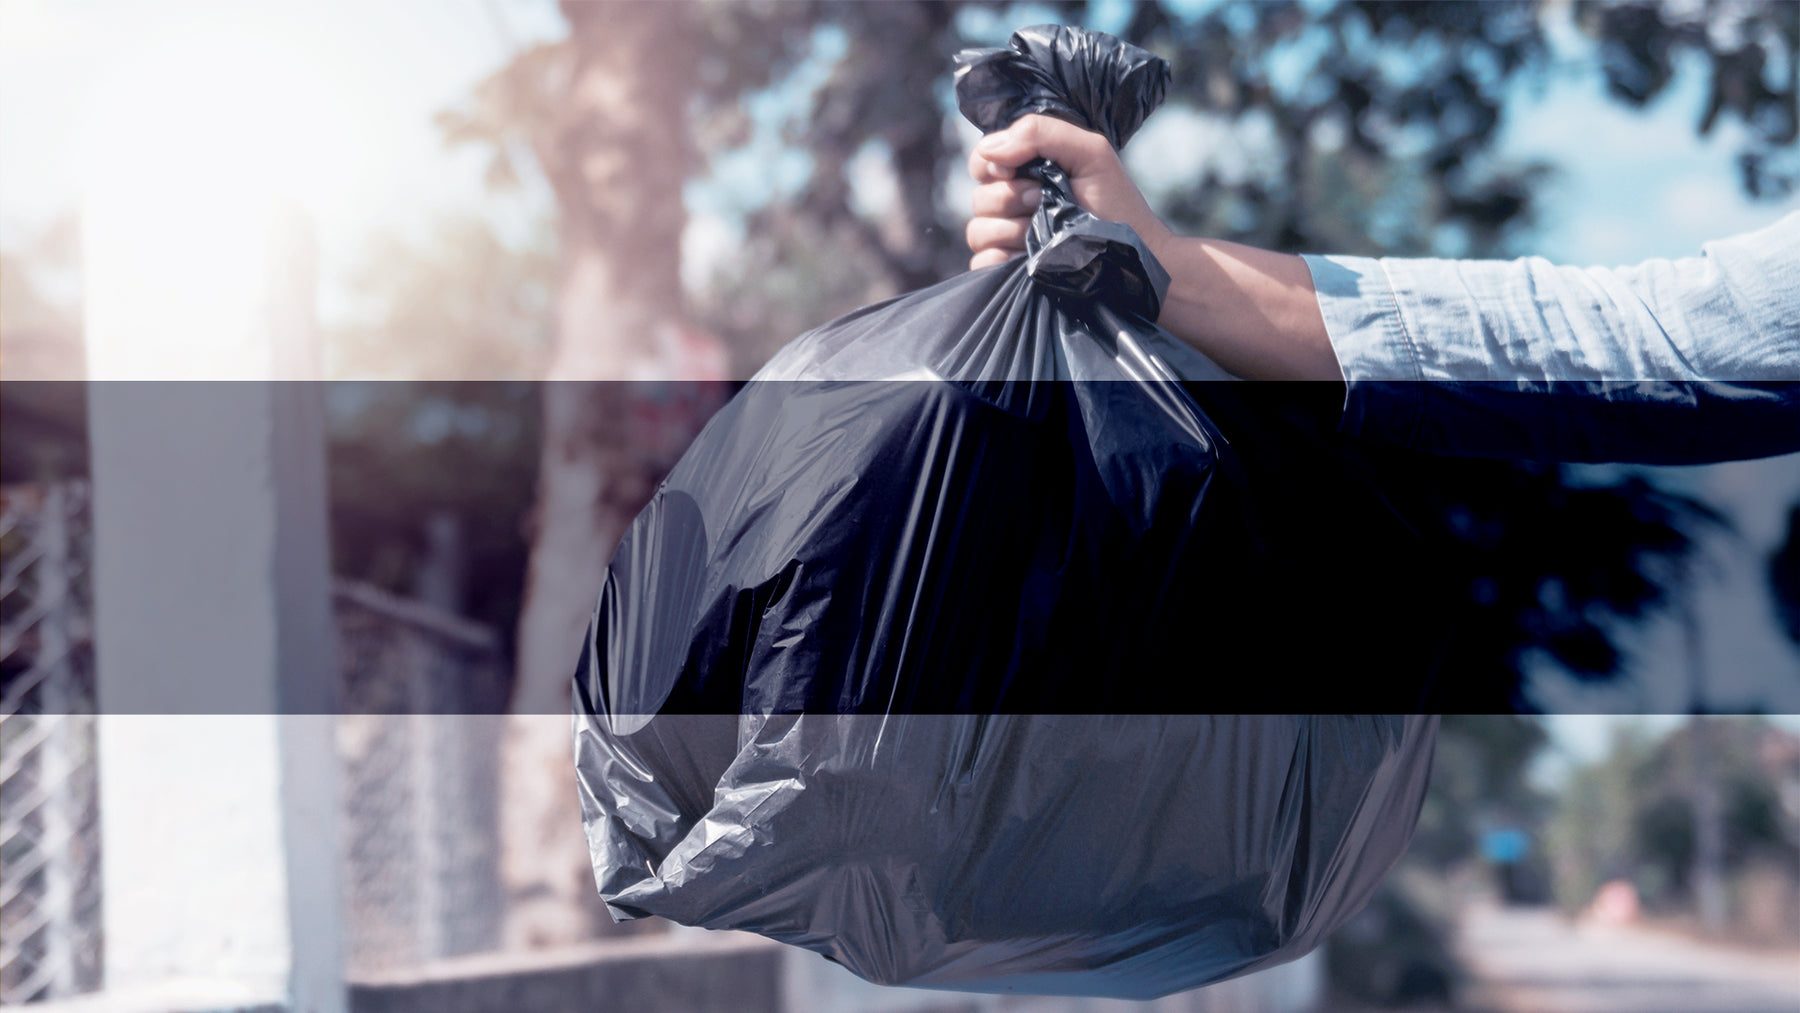 Reli. 13 Gallon Trash Bags (1000 Count Bulk) Clear Garbage Bags, Black